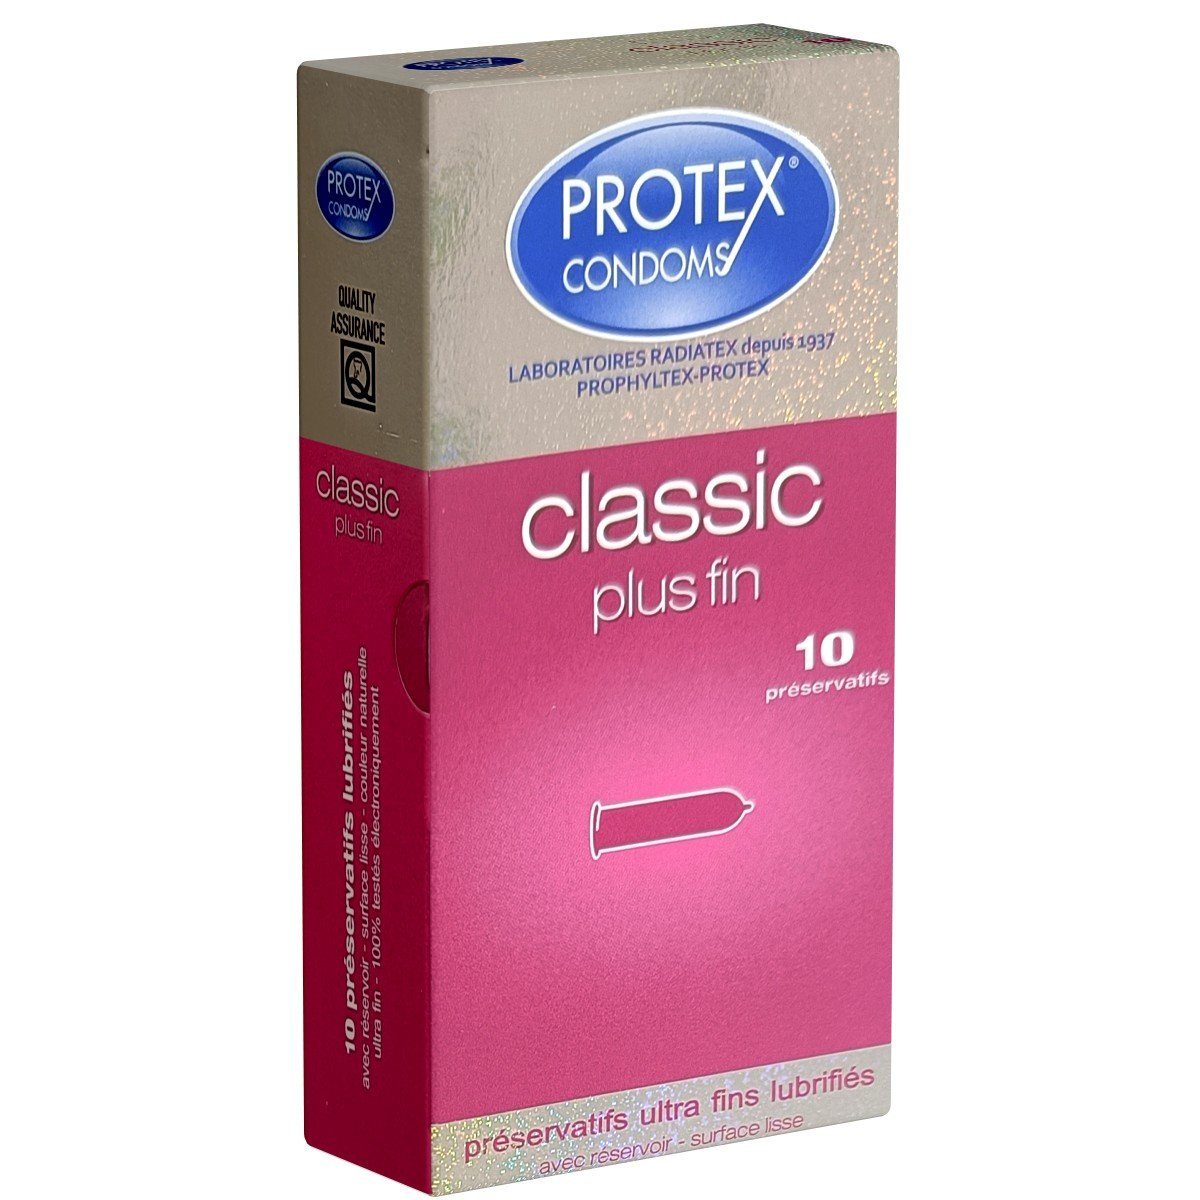 Protex Kondome Packung 10 superdünne Plus St., Kondome CLASSIC Fin aus Frankreich mit